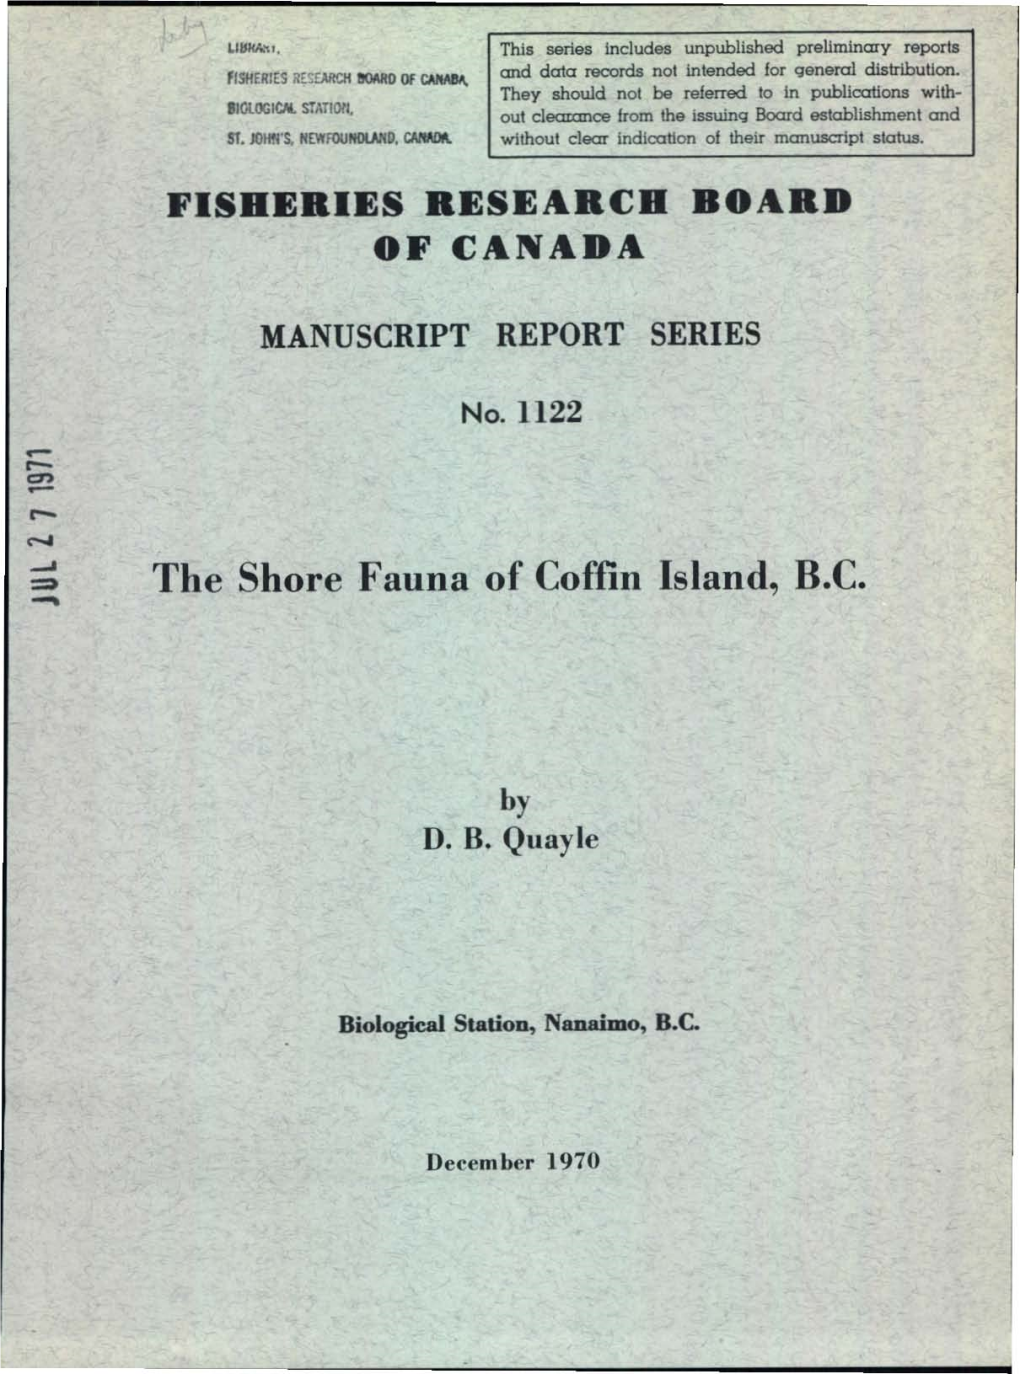 The Shore Fauna of Coffin Island, H.C